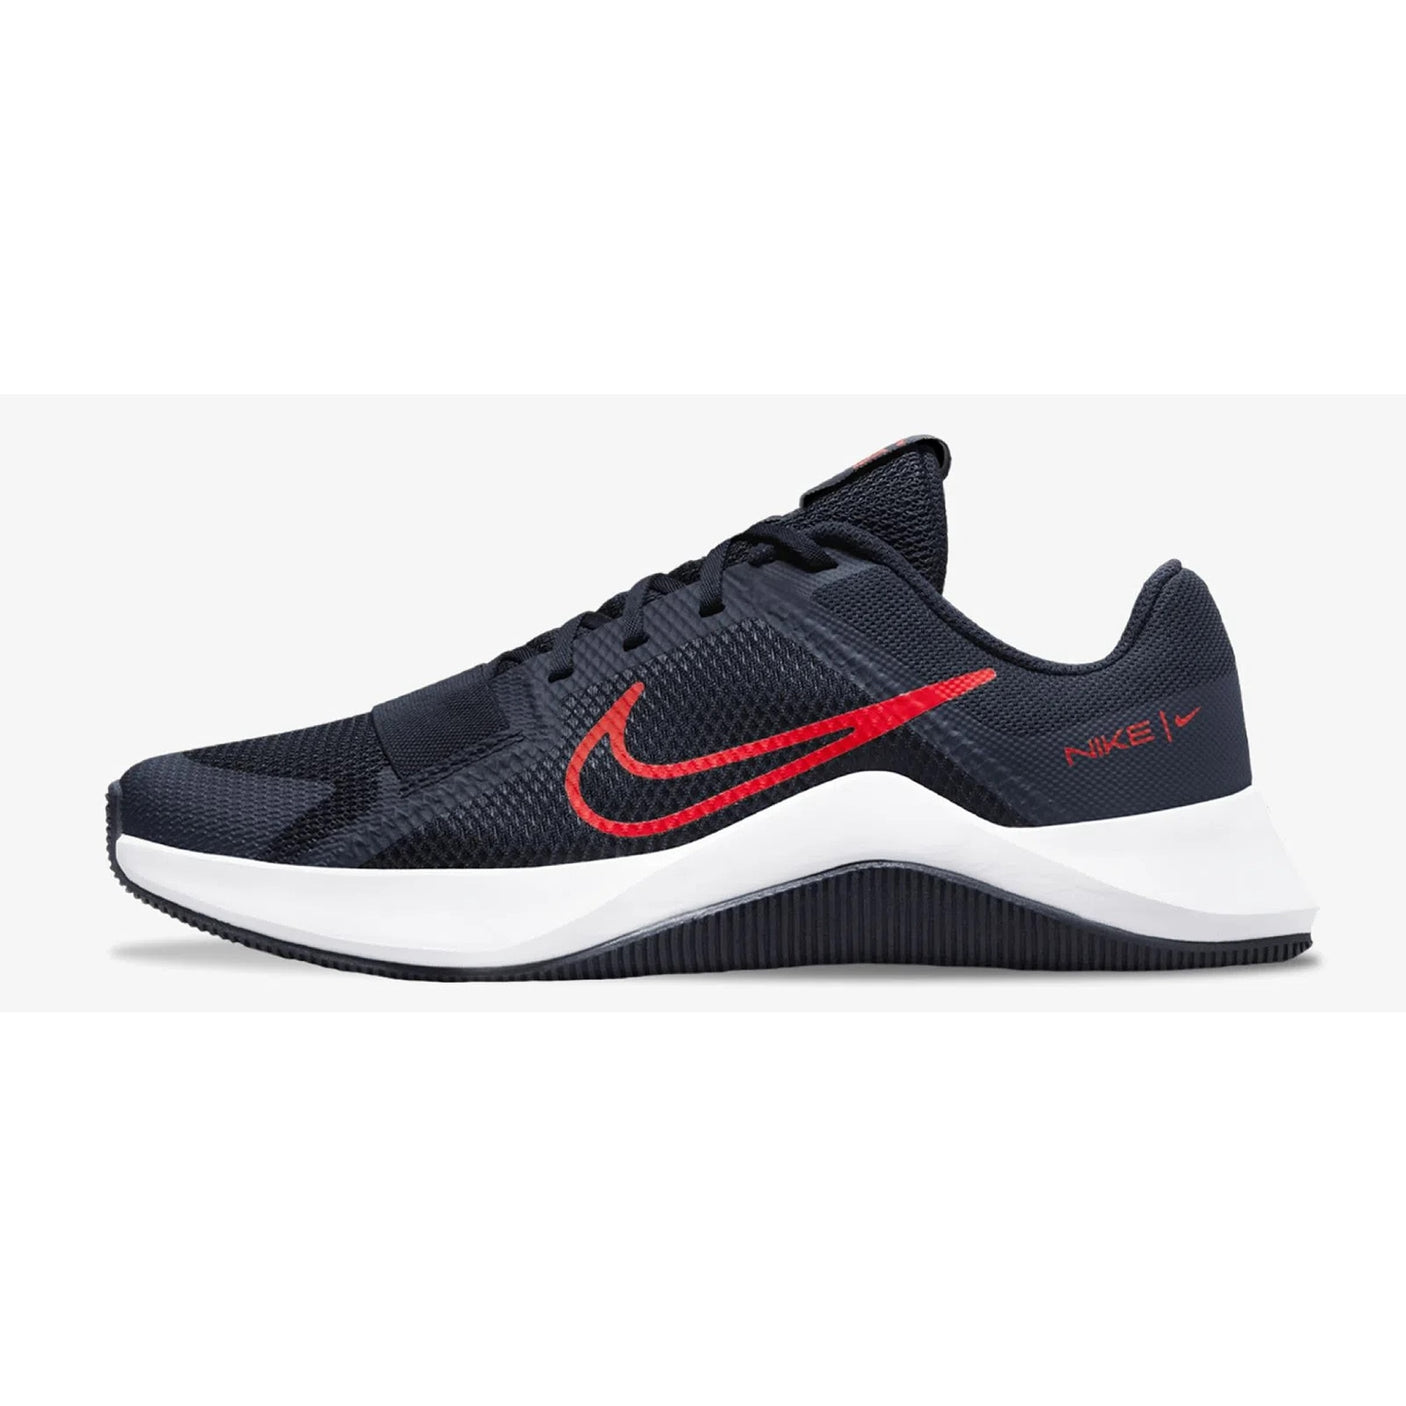 Nike Mens M Mc Trainer 2 Running Shoe (DM0823-402)